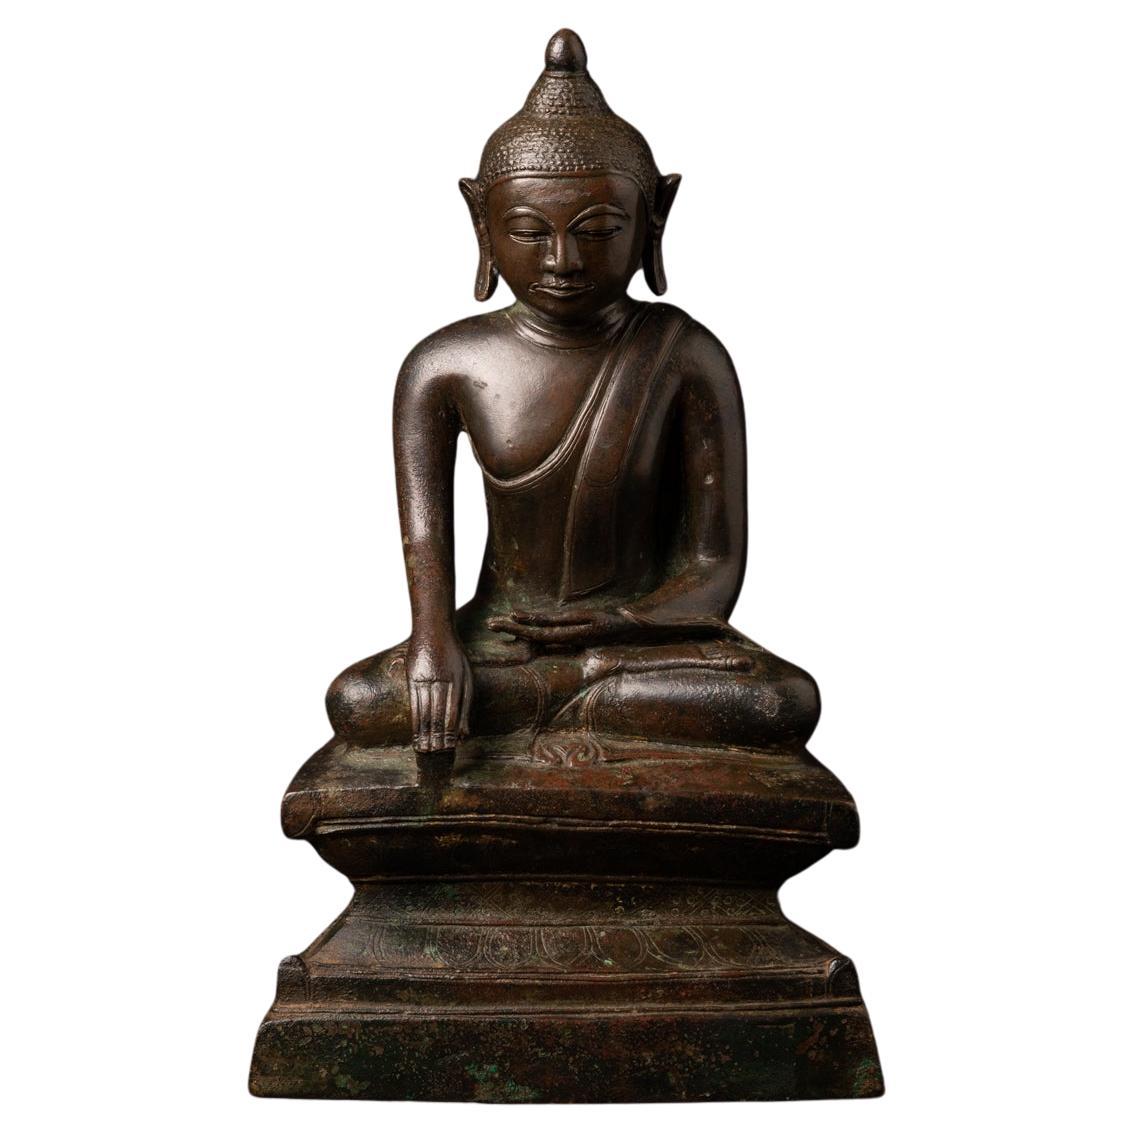 15th century Special antique bronze Burmese Buddha statue from Burma